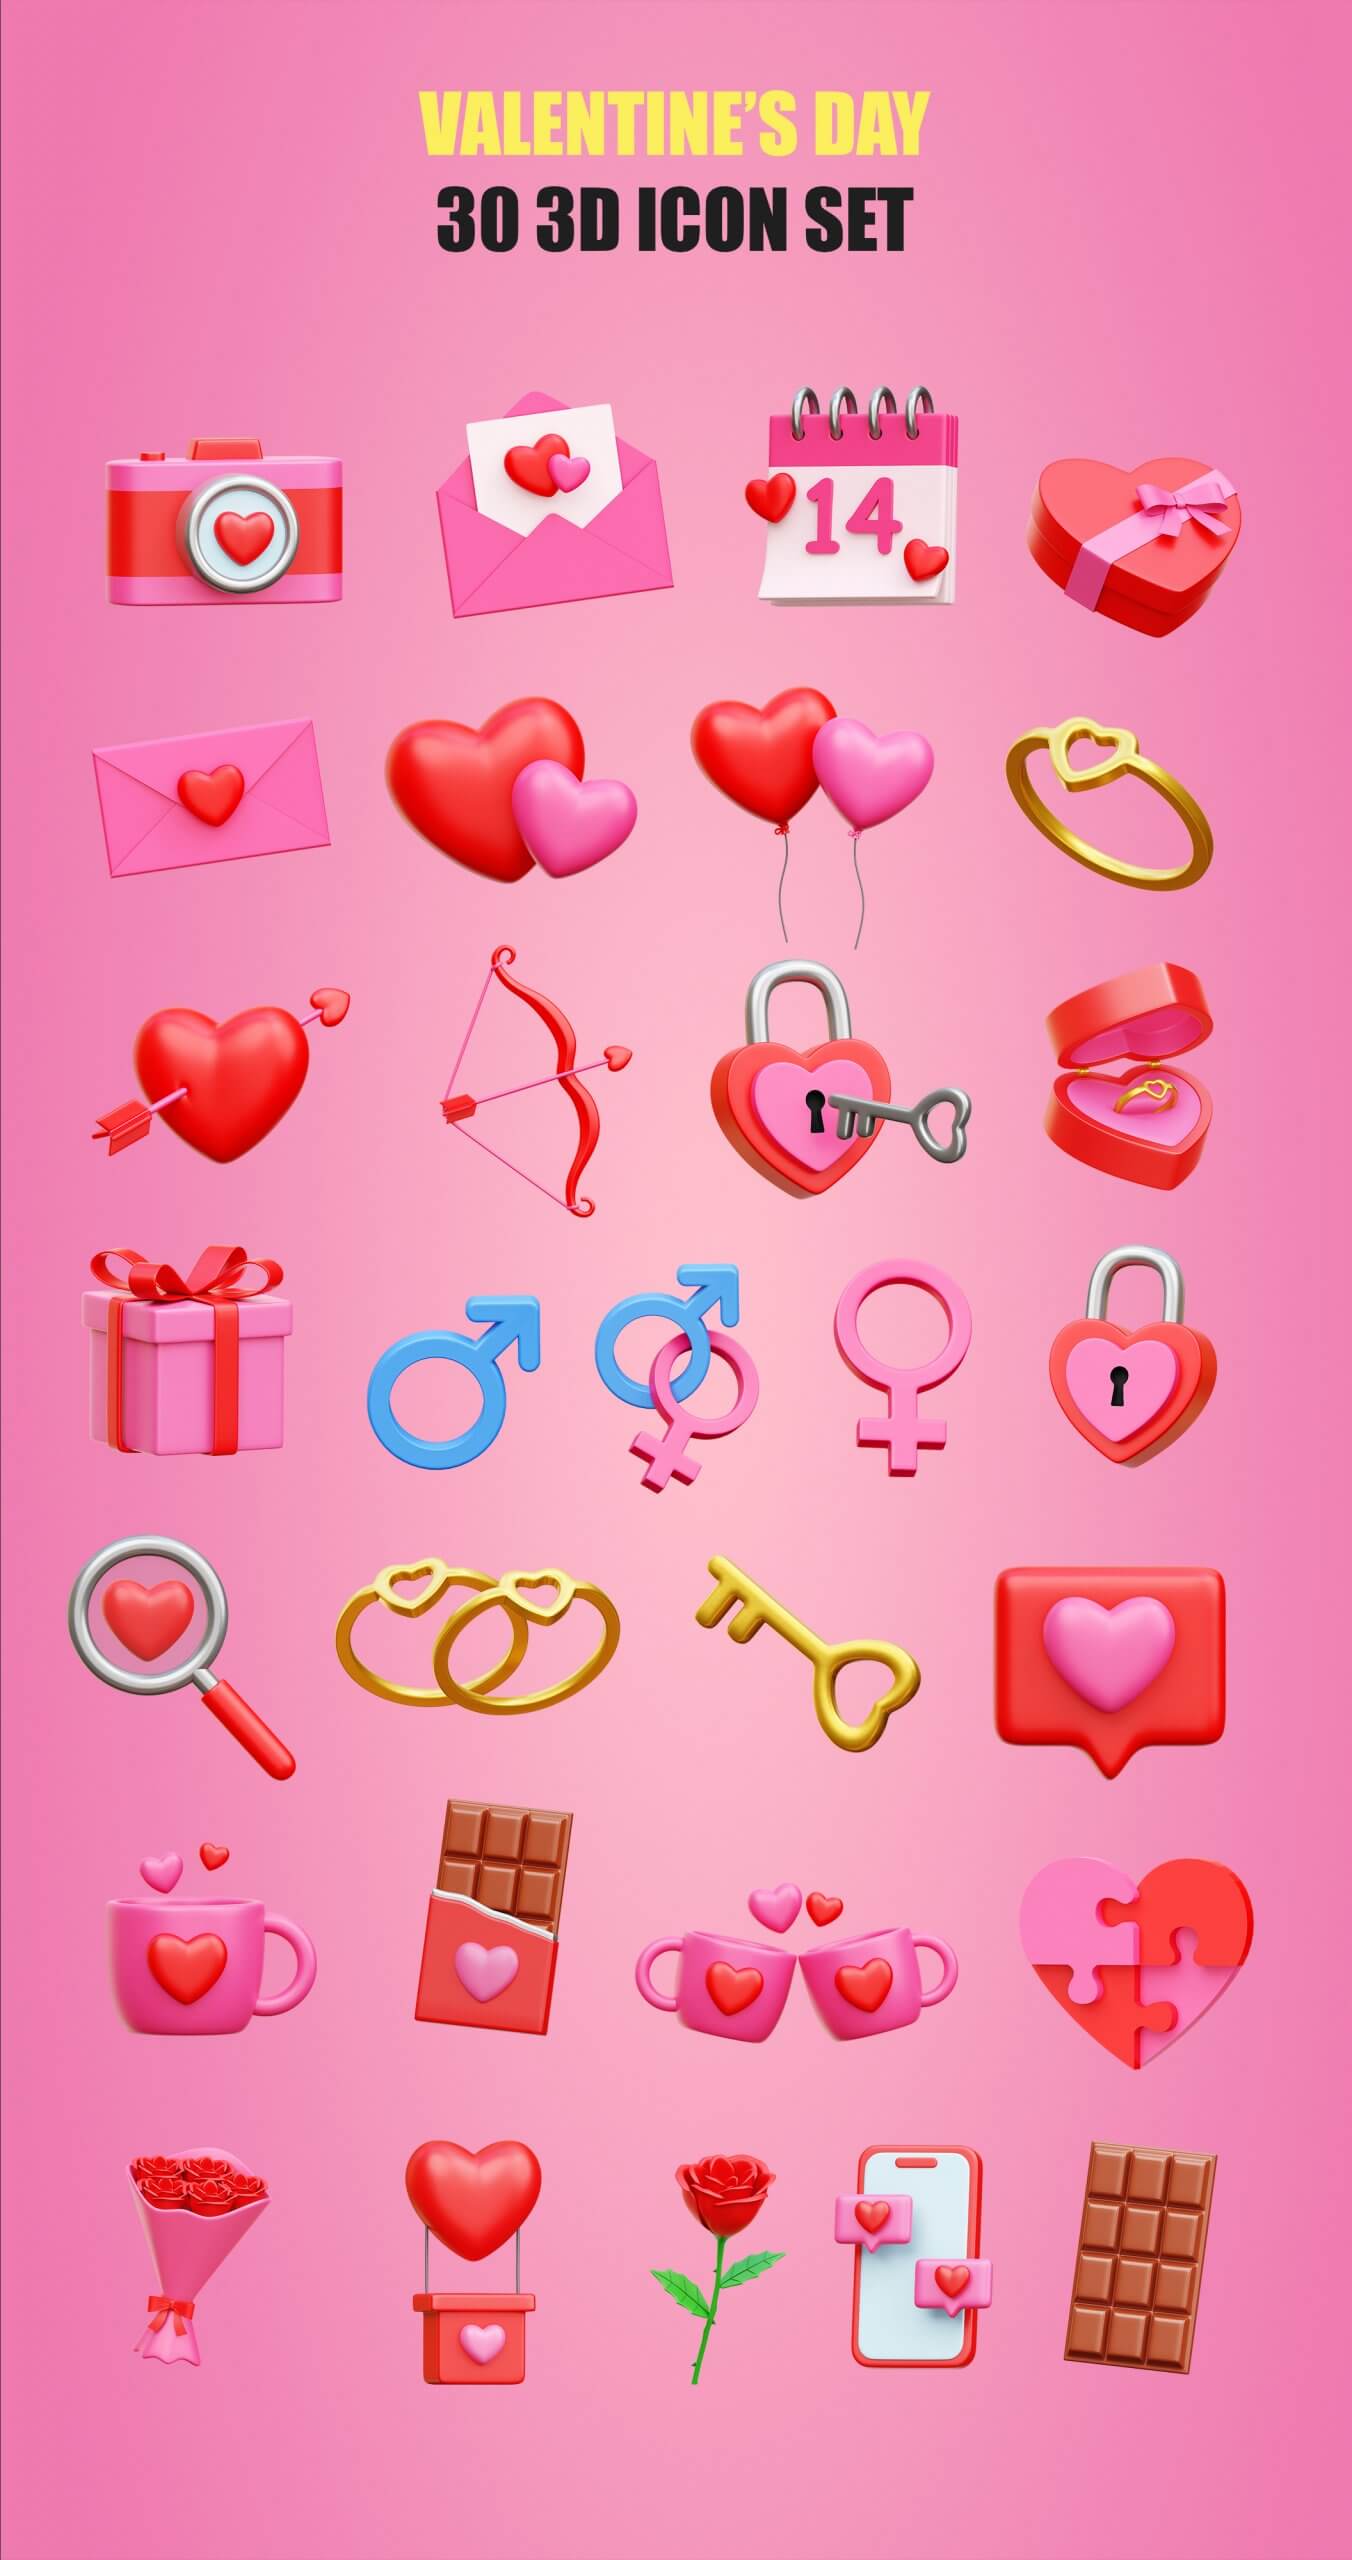 情侣社交类应用图标模板素材Valentine 3D Icon Illustrations插图6